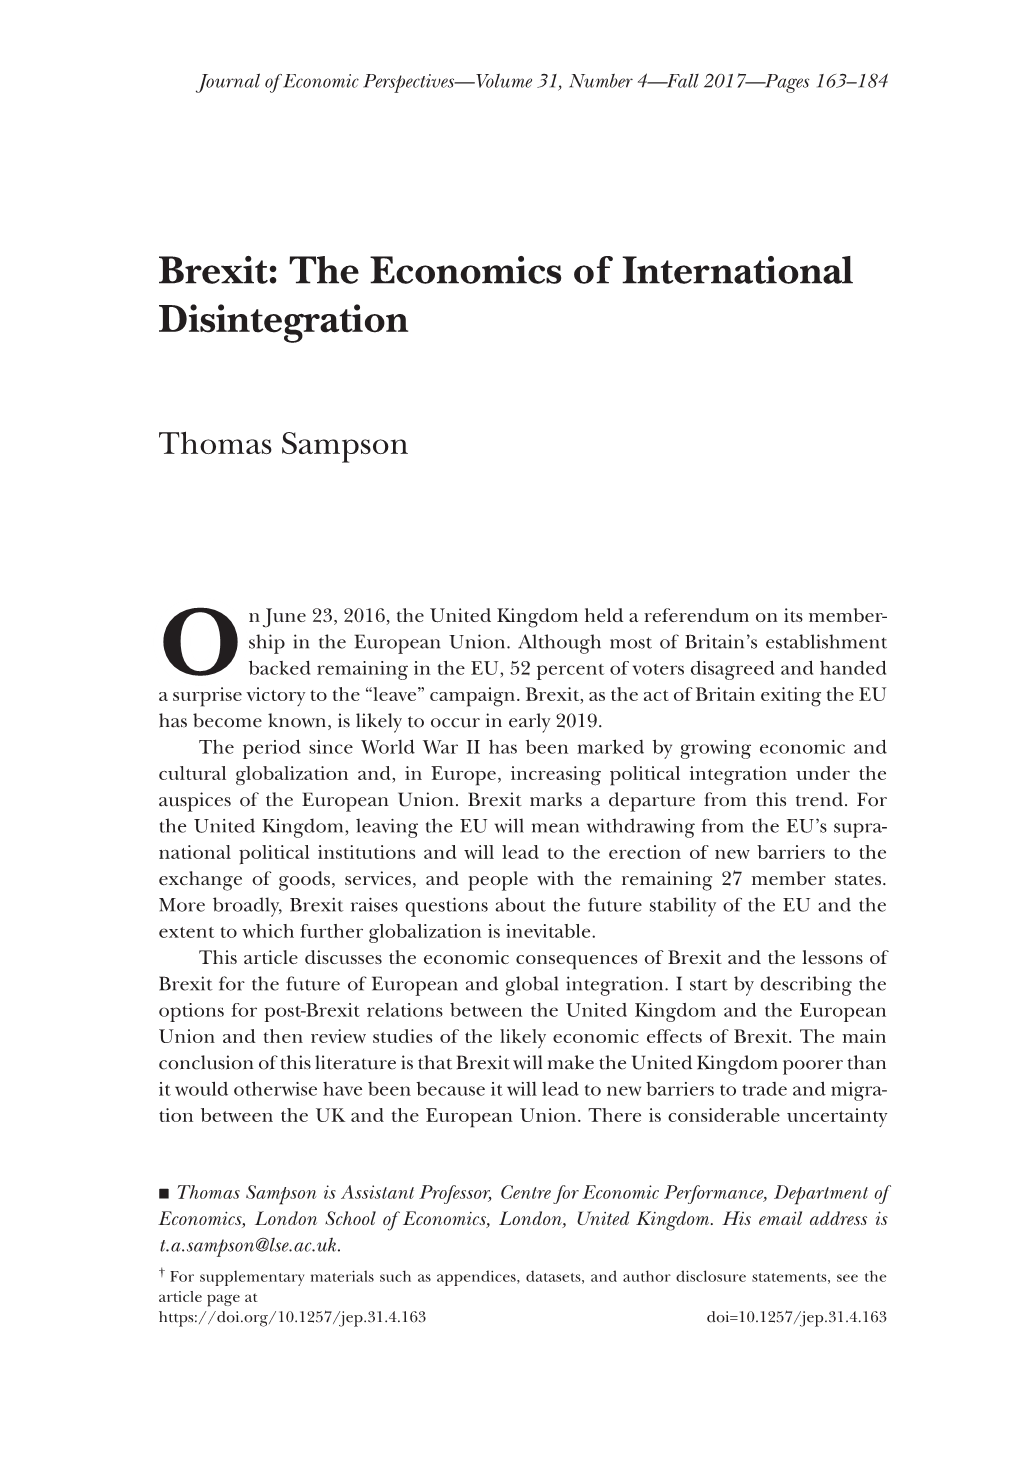 Brexit: the Economics of International Disintegration